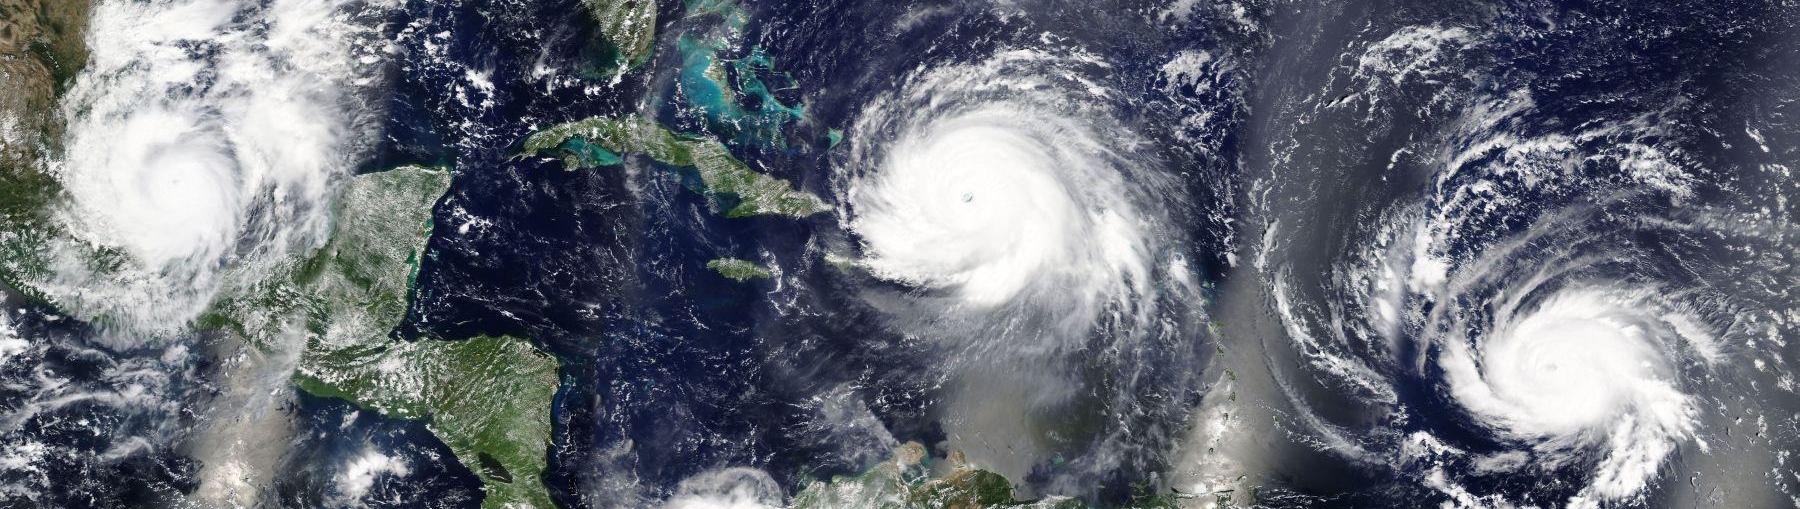 Irma, Jose i Katia - trzy huragany okiem NASA/Fot. Shutterstock